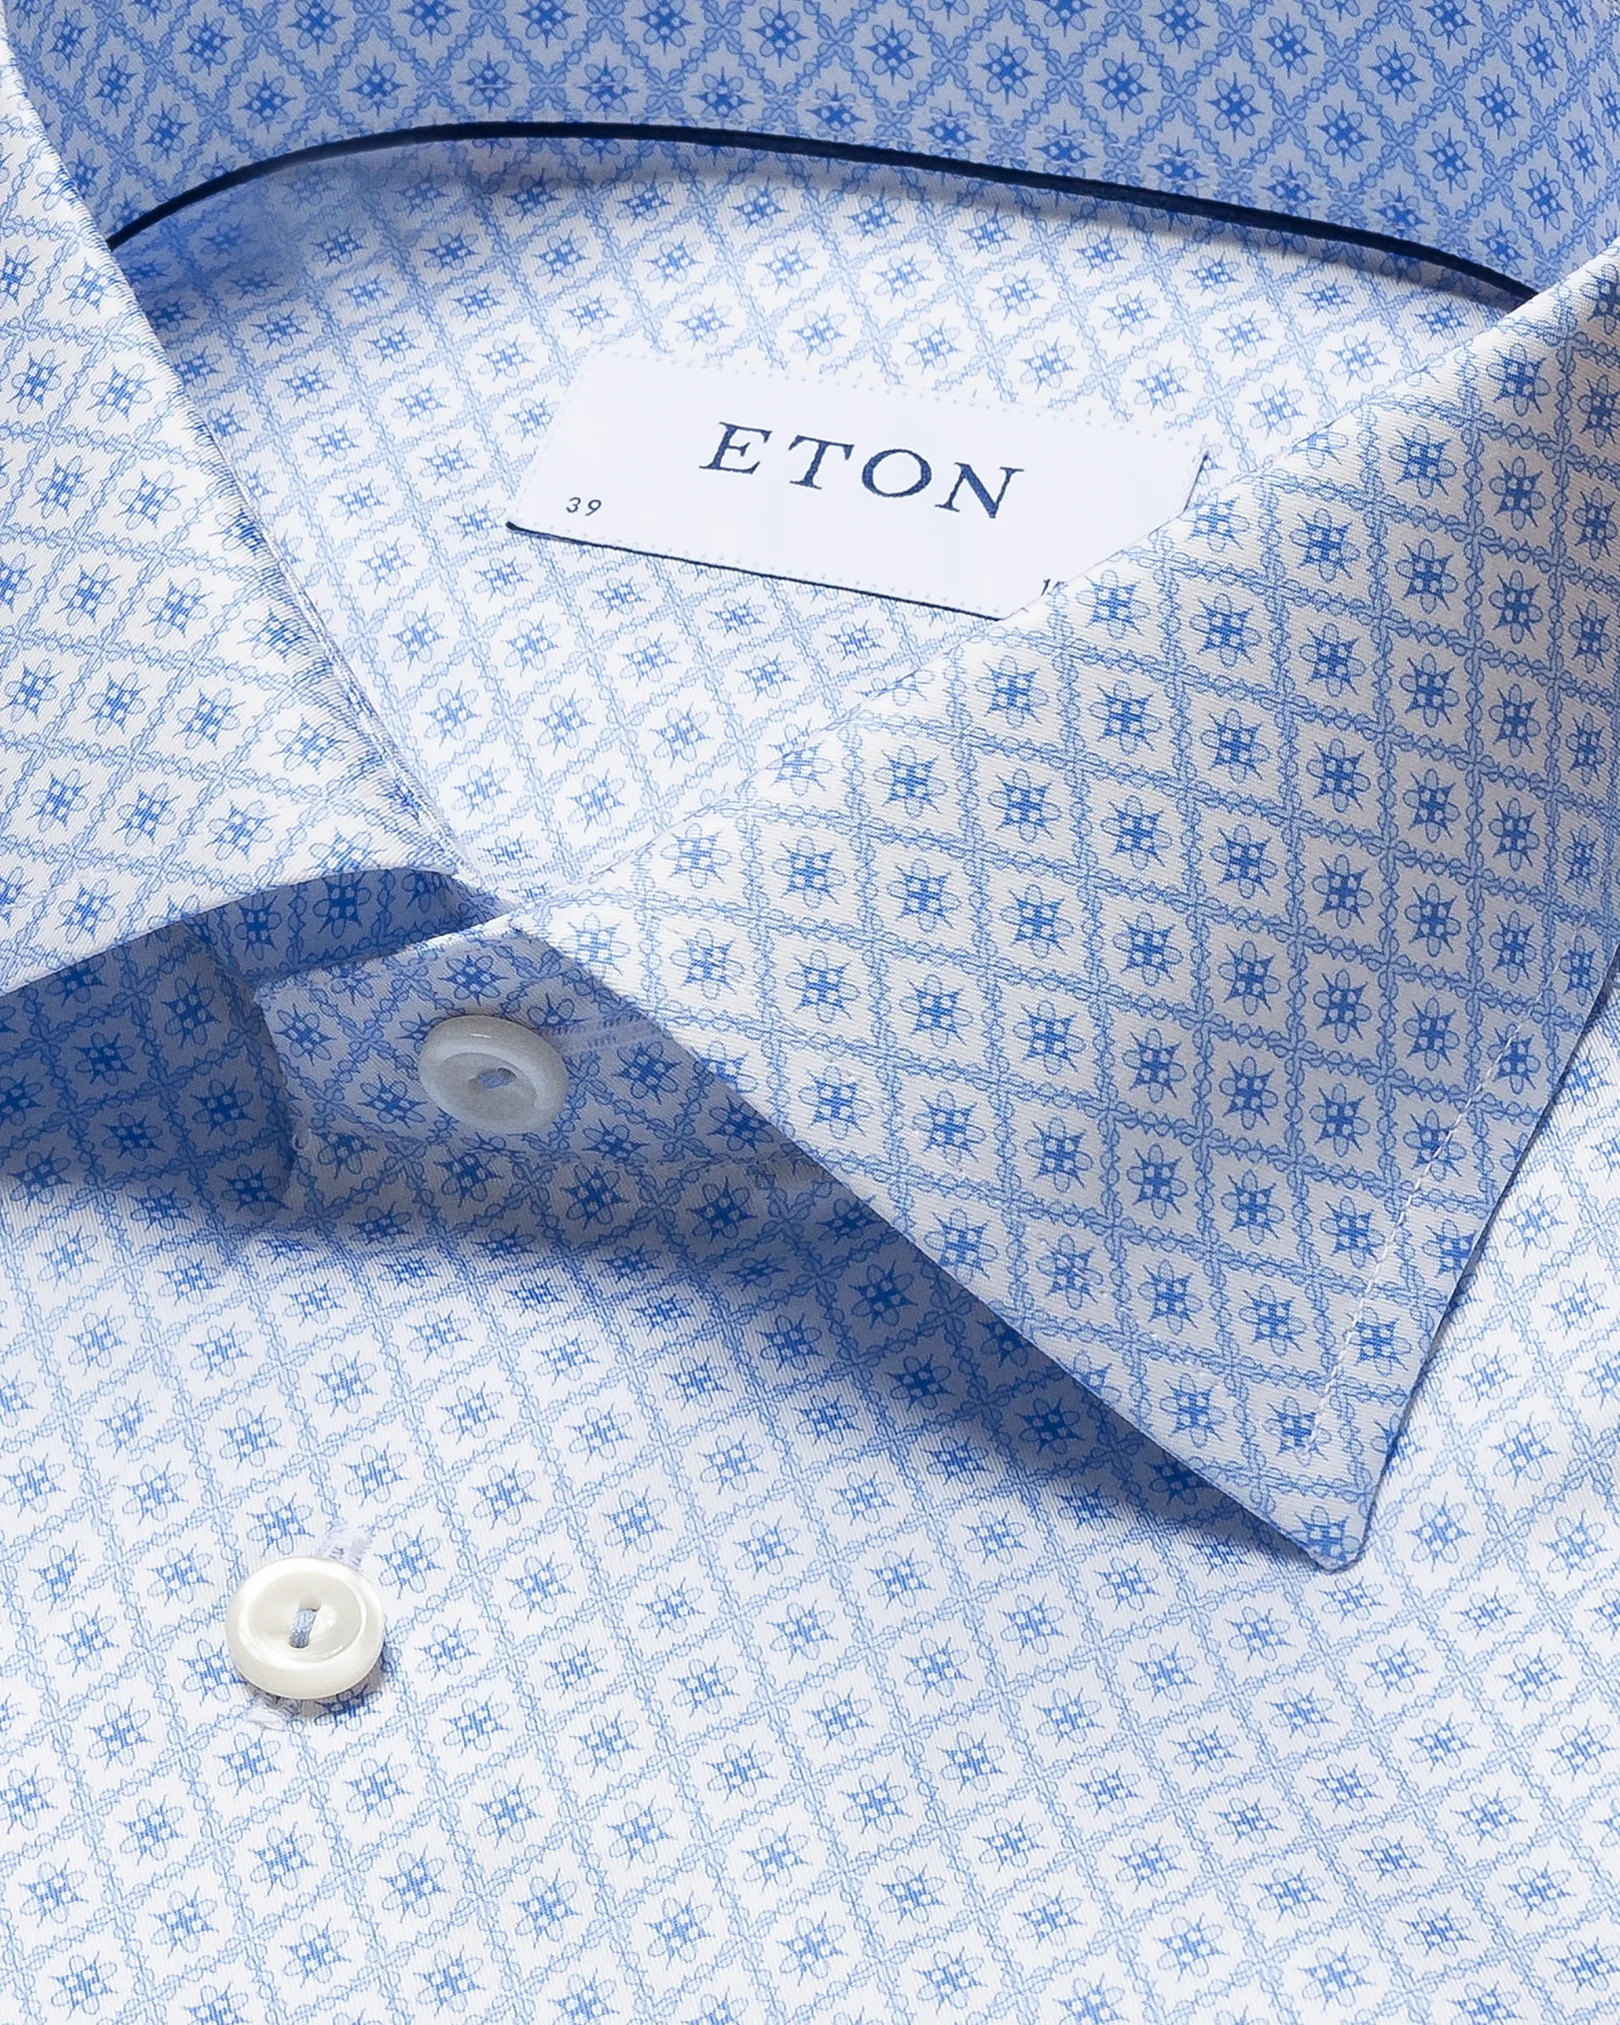 Eton - blue mosaic print fine twill shirt